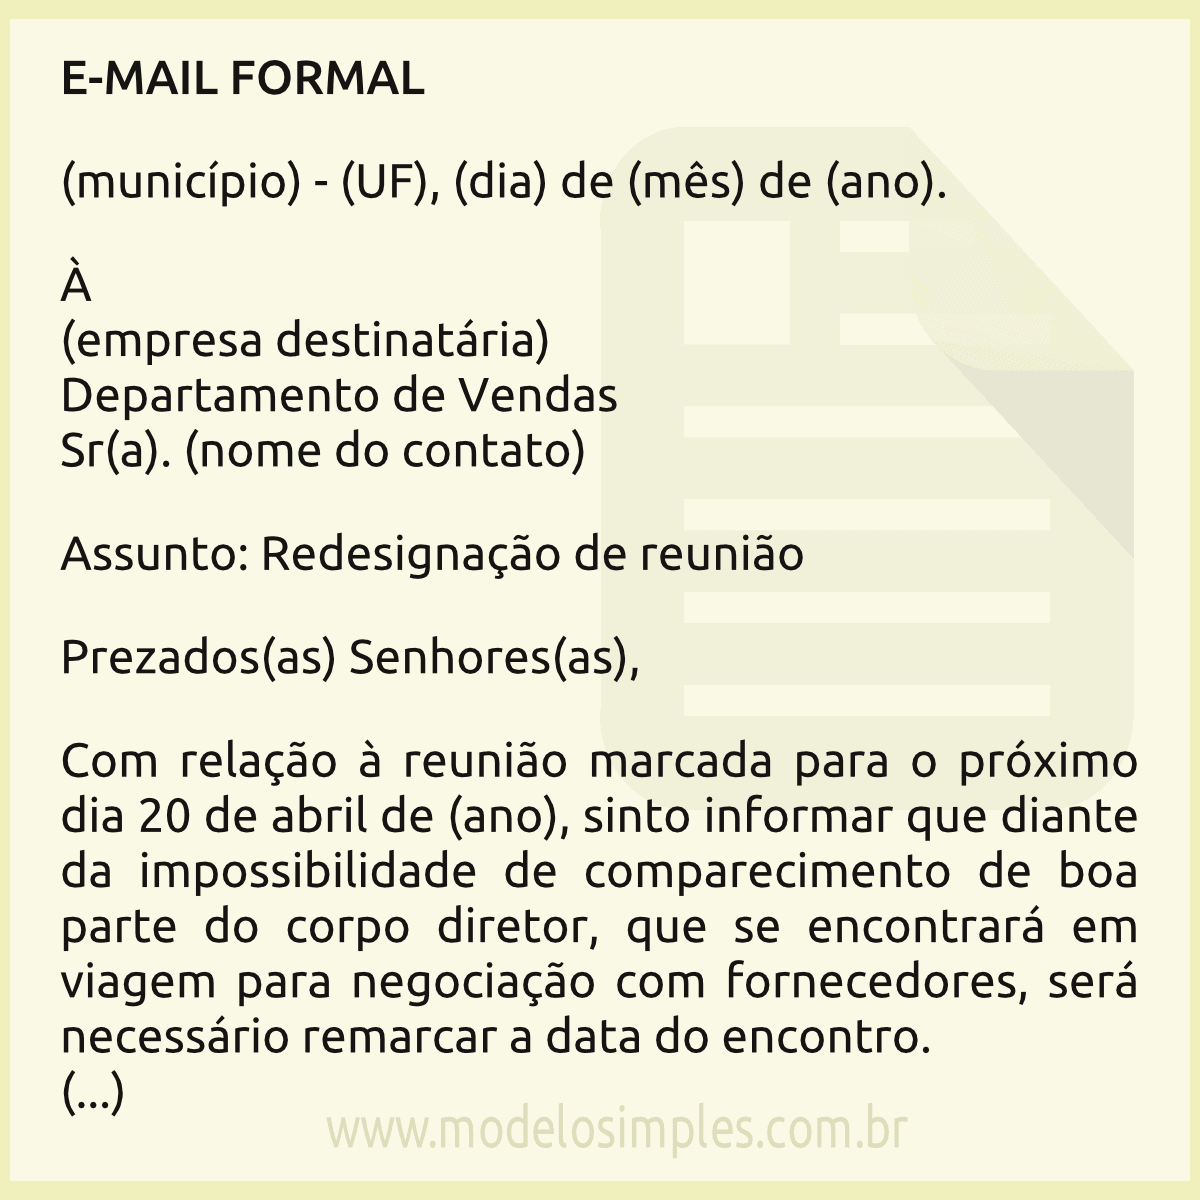 Top 52 Imagen Modelo De Email Formal En Portugues Abzlocalmx 0650